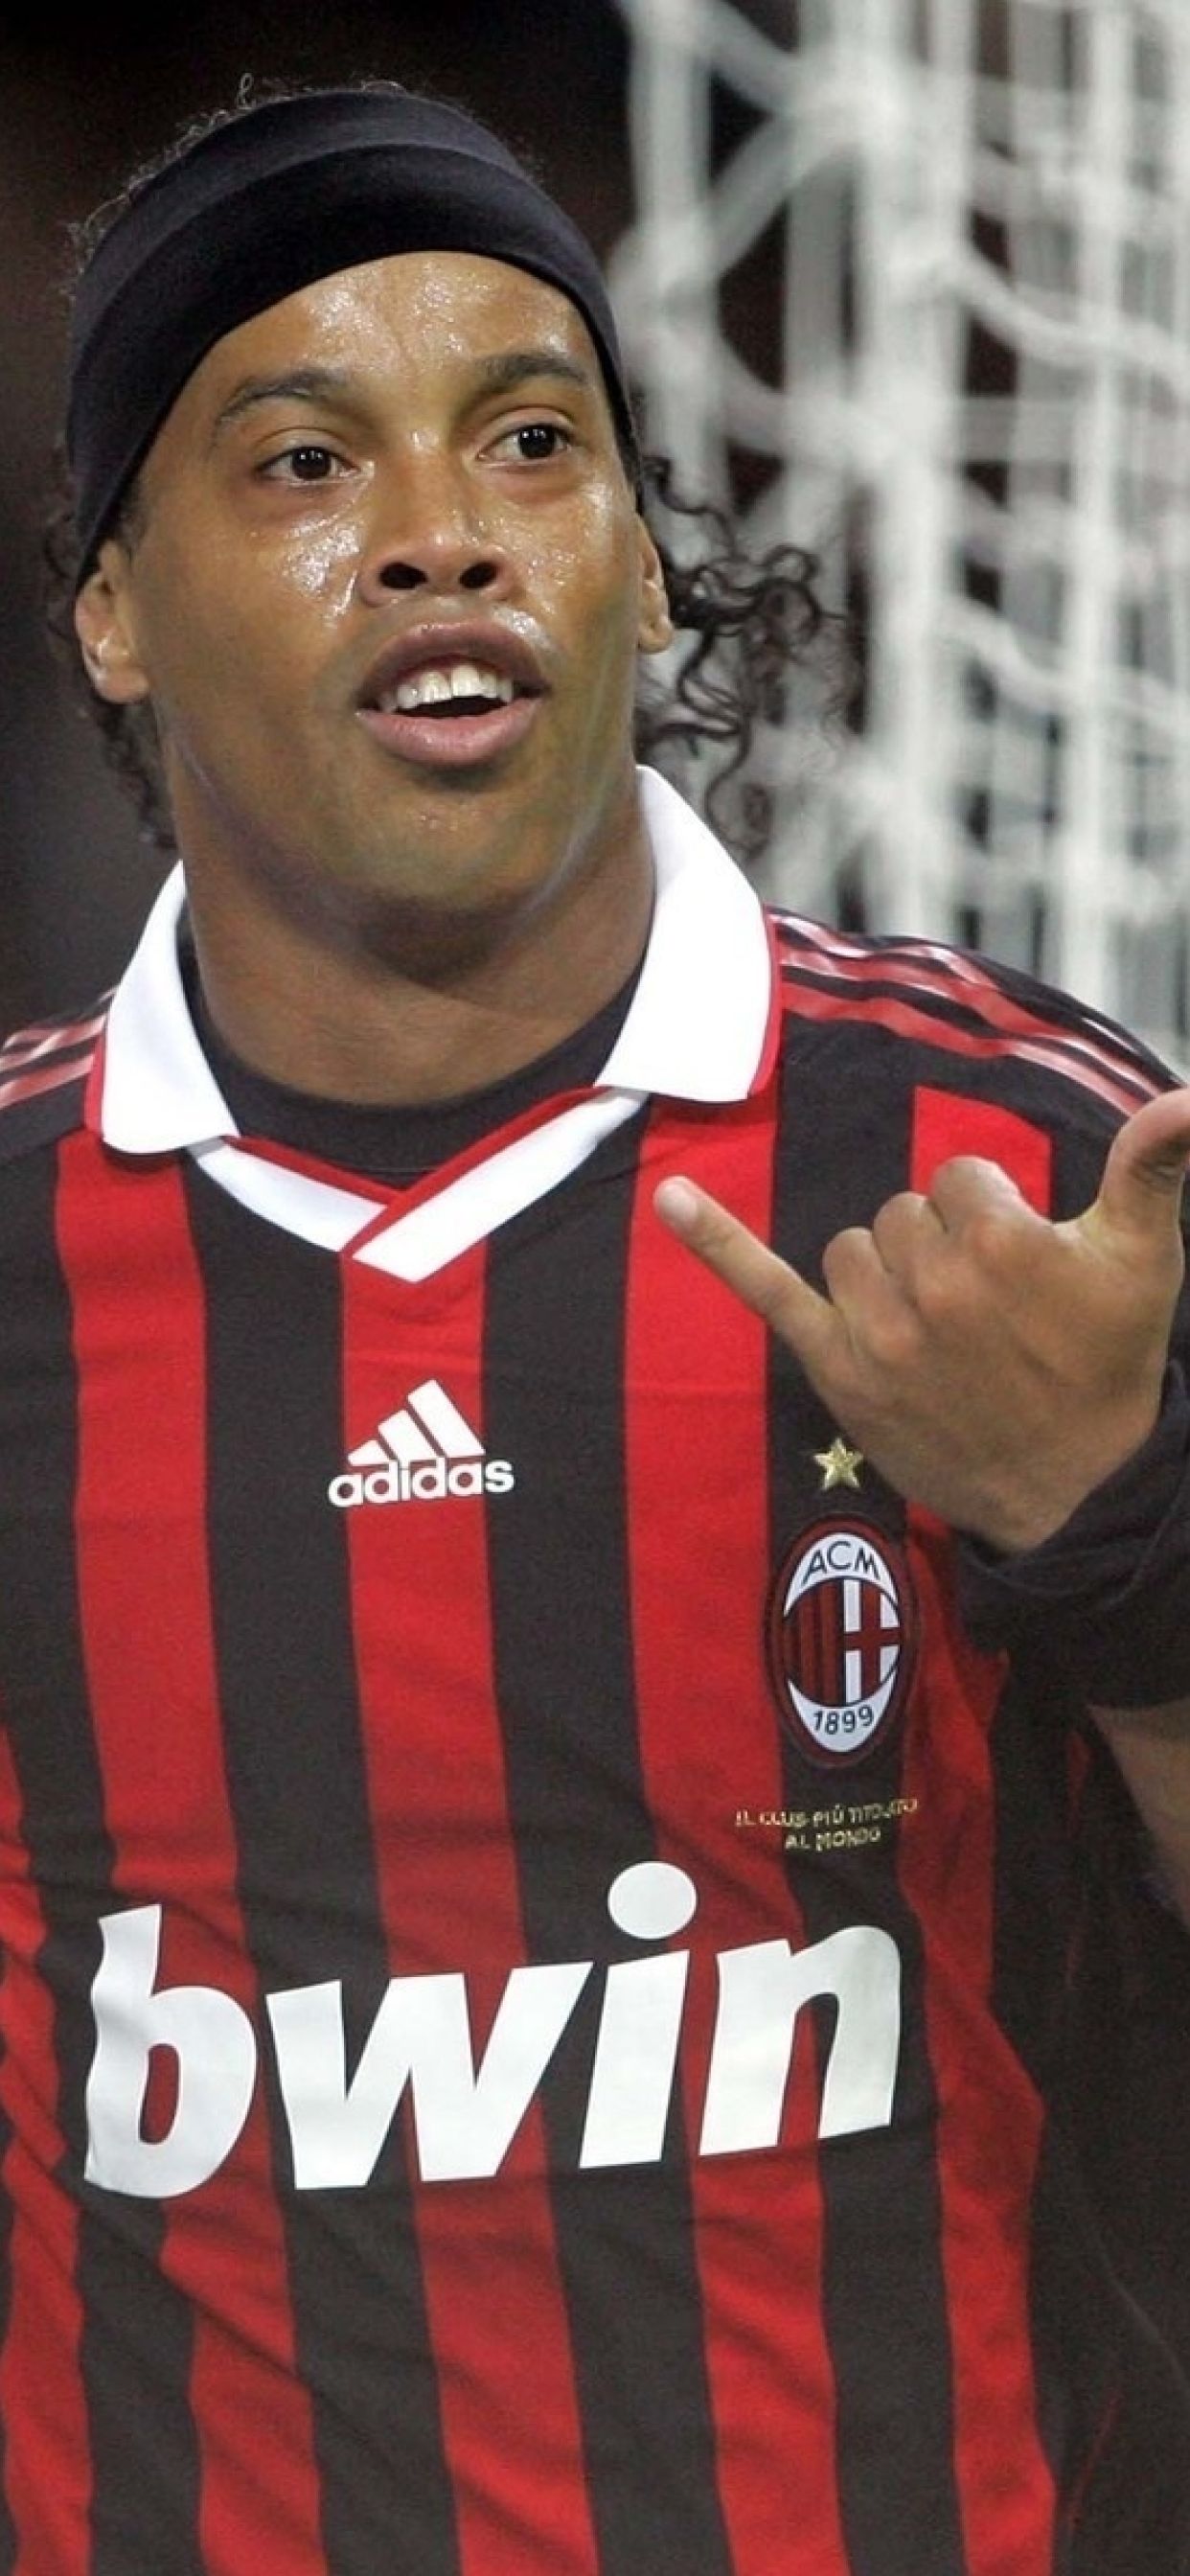 ronaldinho, footballer, negro iPhone XS MAX Wallpaper, HD Sports 4K Wallpaper, Image, Photo and Background